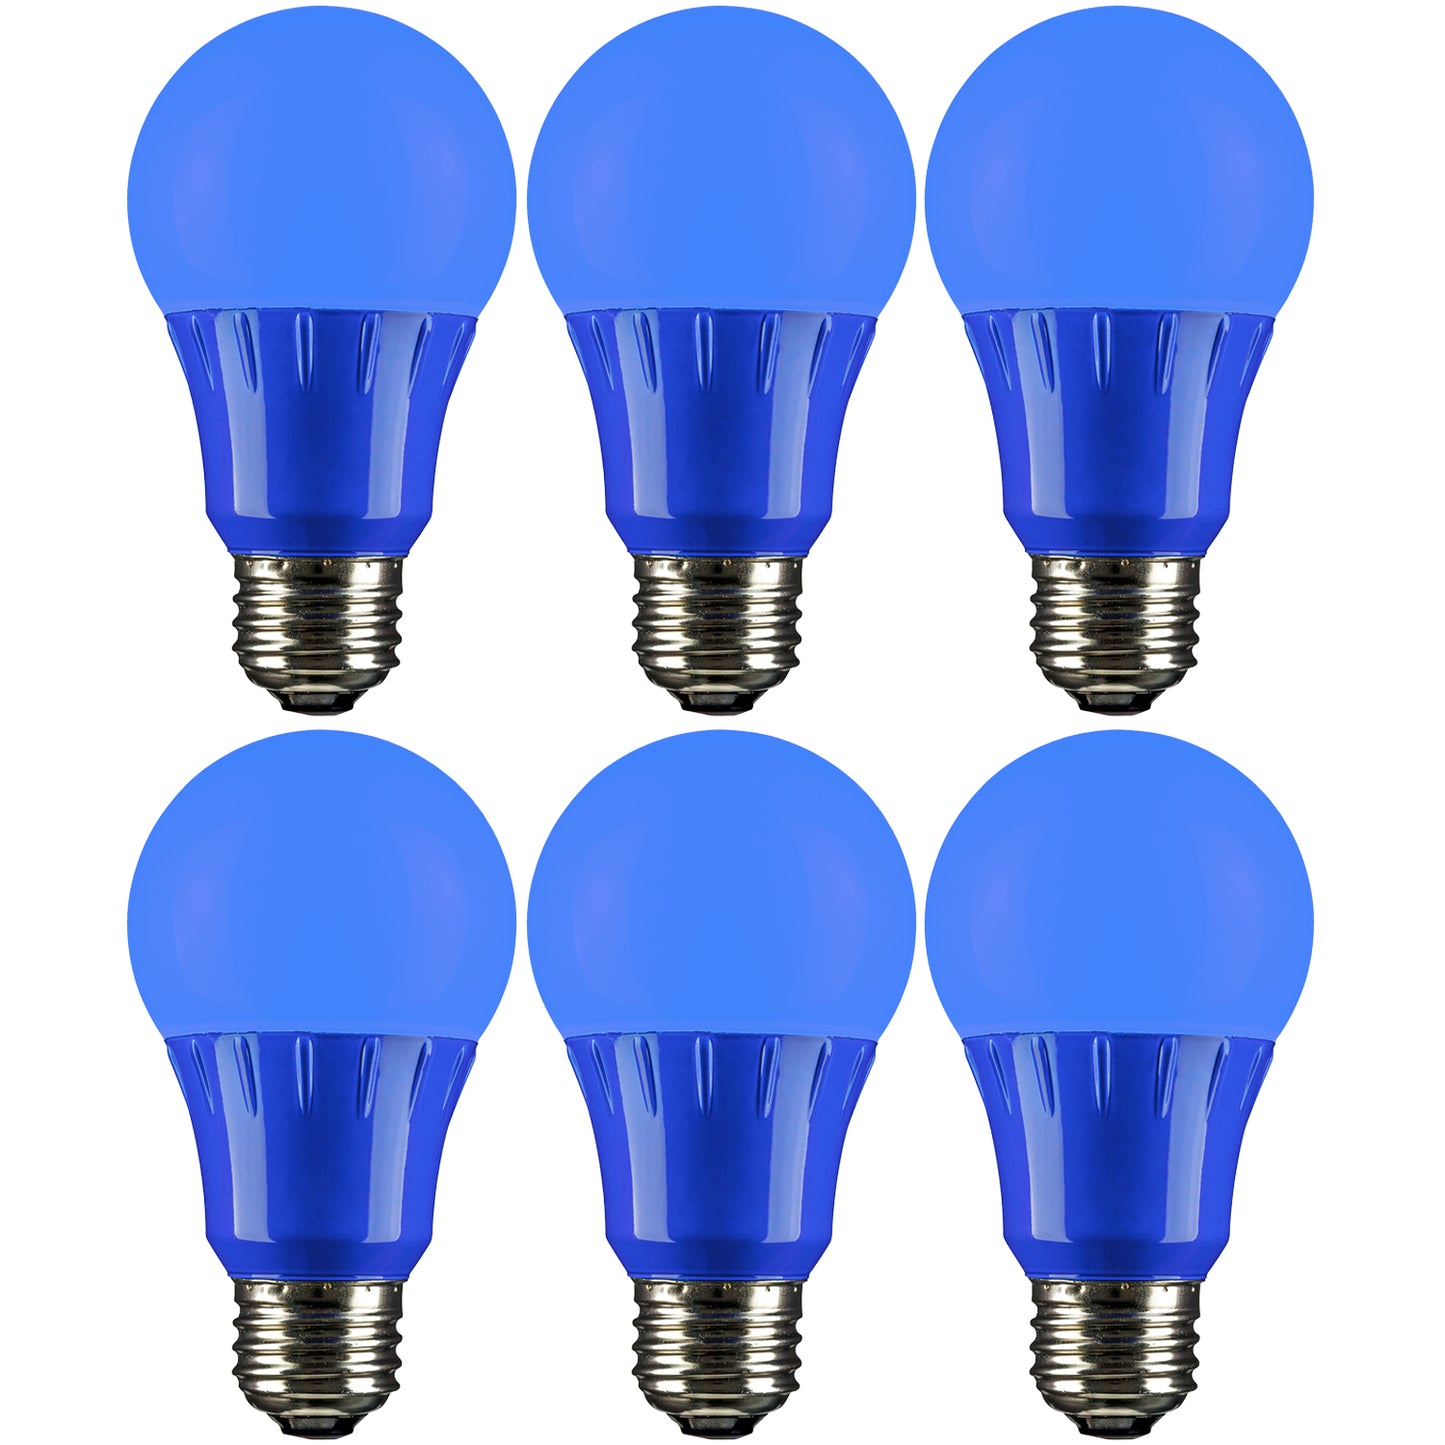 SUNLITE A19/3W/B/LED/6PK LED Colored A19 3W Light Bulbs with Medium (E26) Base (6 Pack), Blue